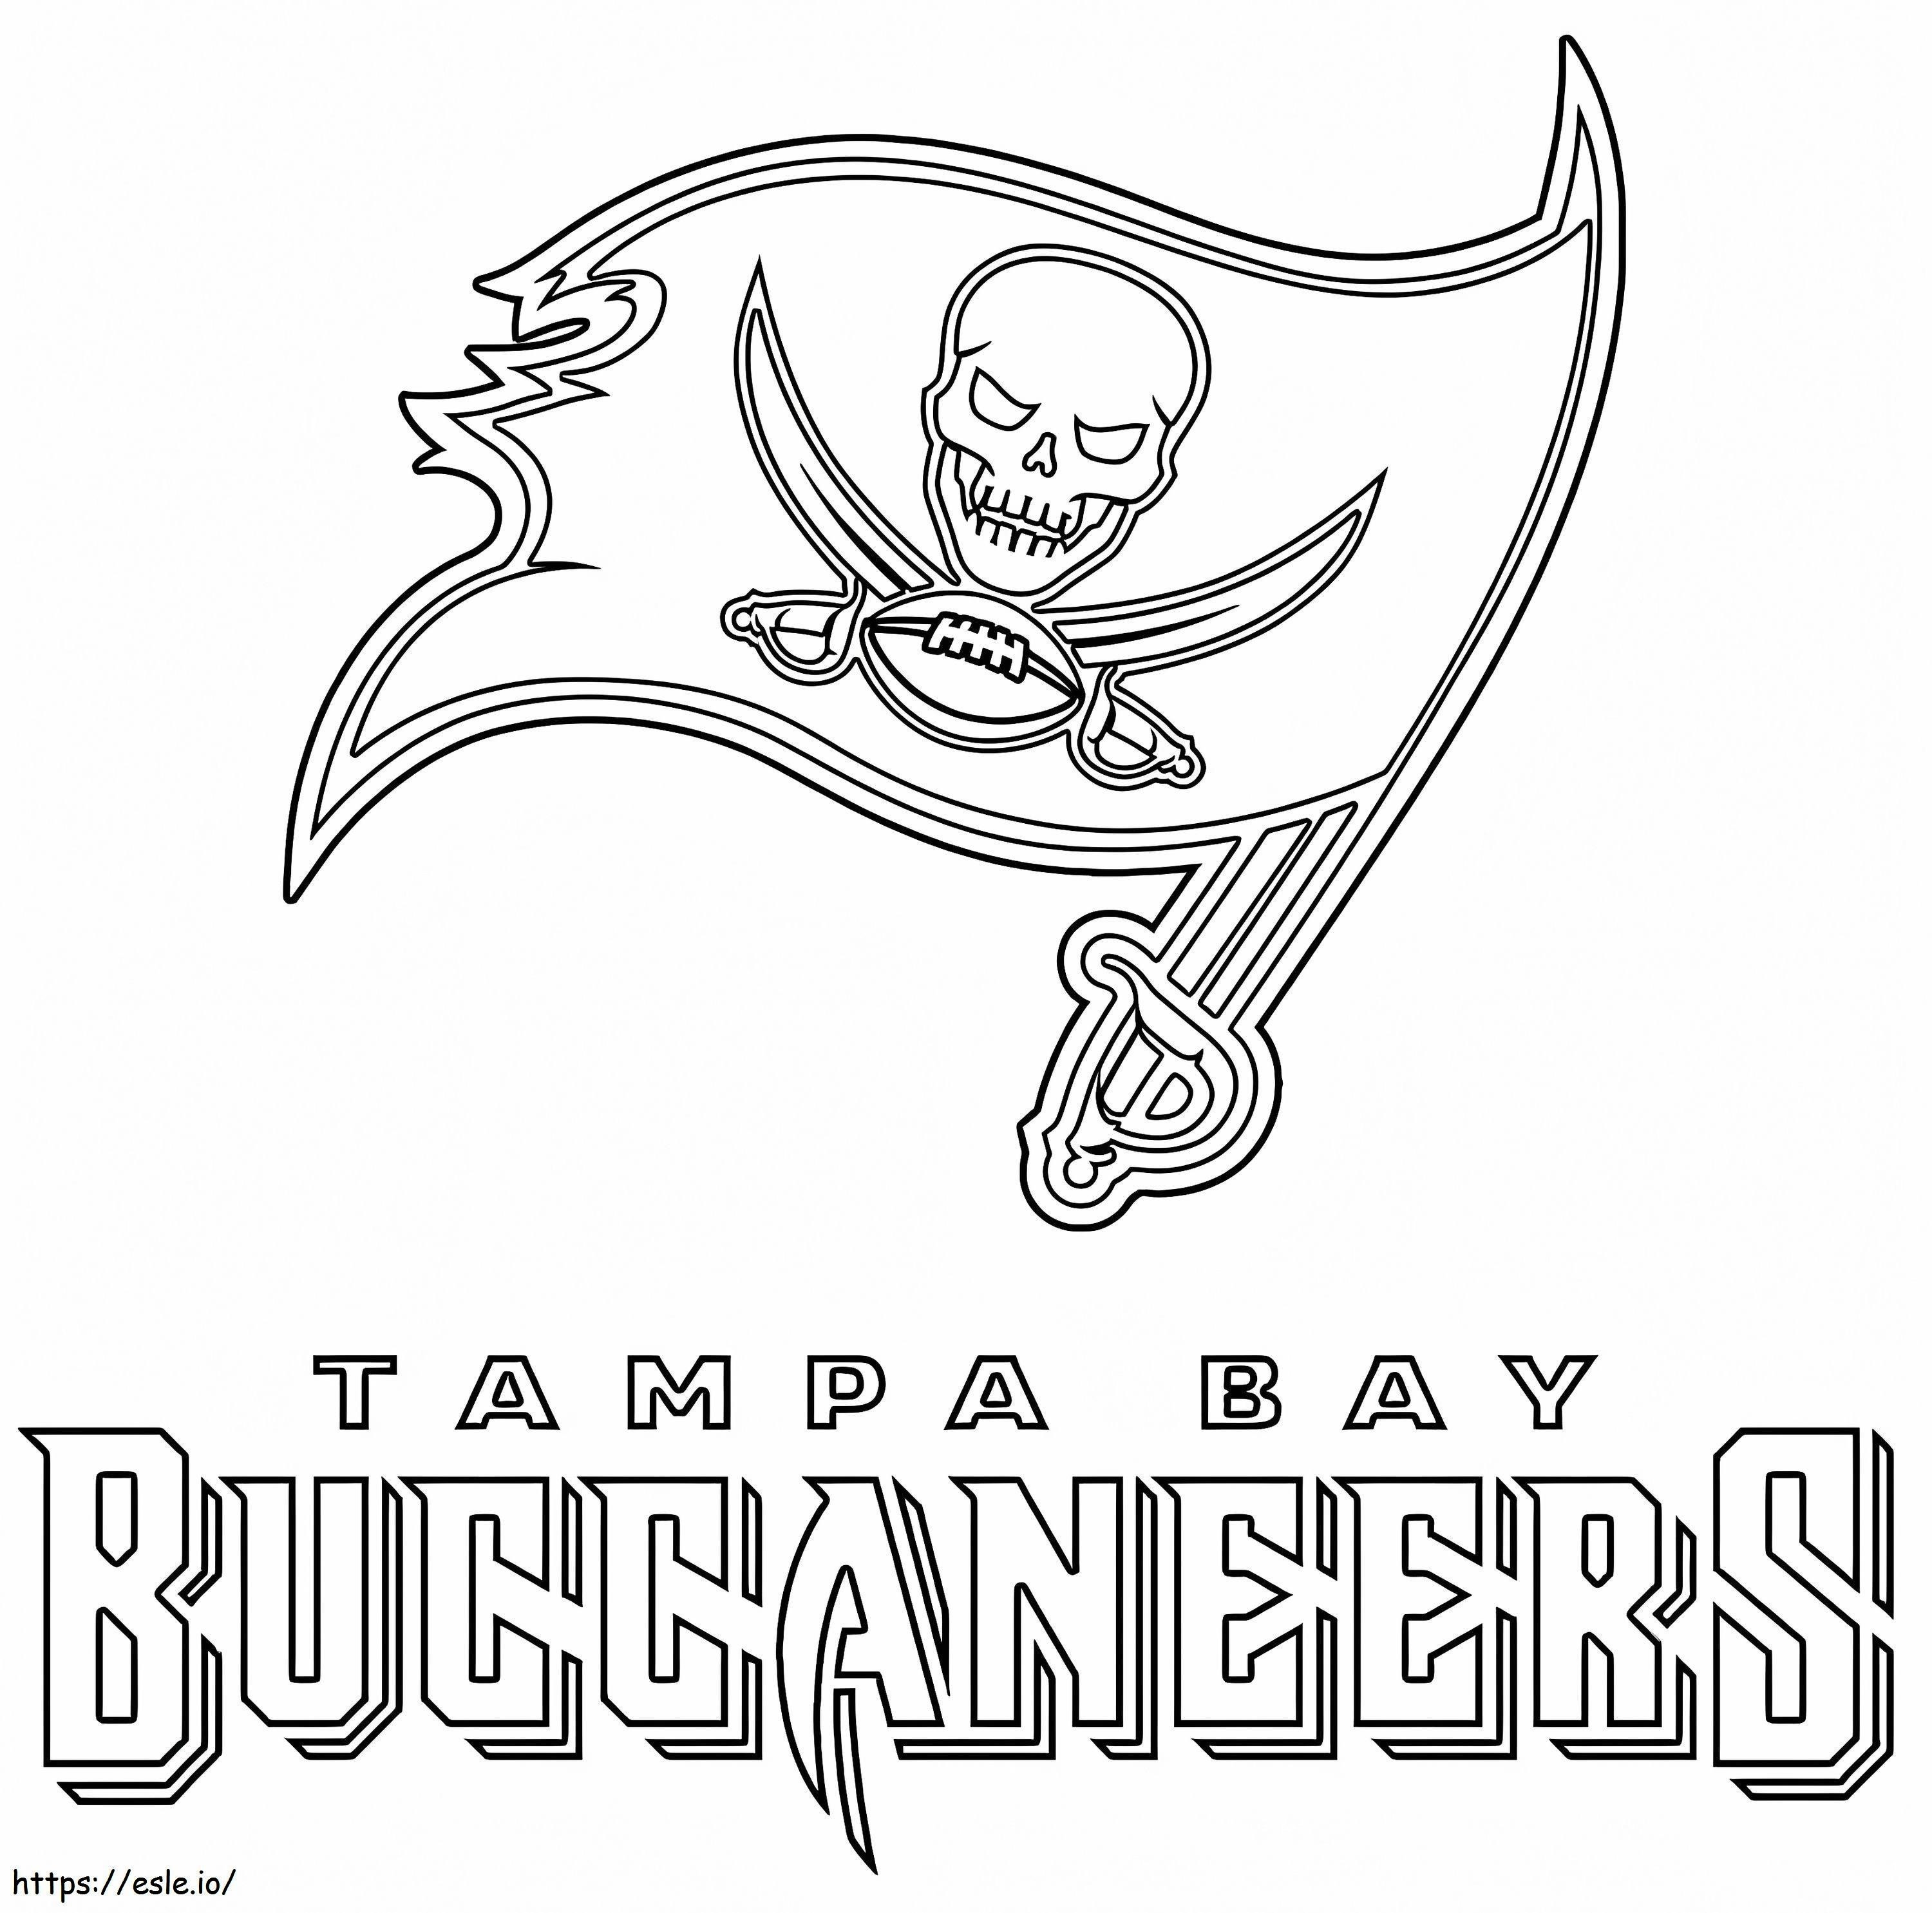 Tampa Bay Buccaneers para impressão grátis para colorir